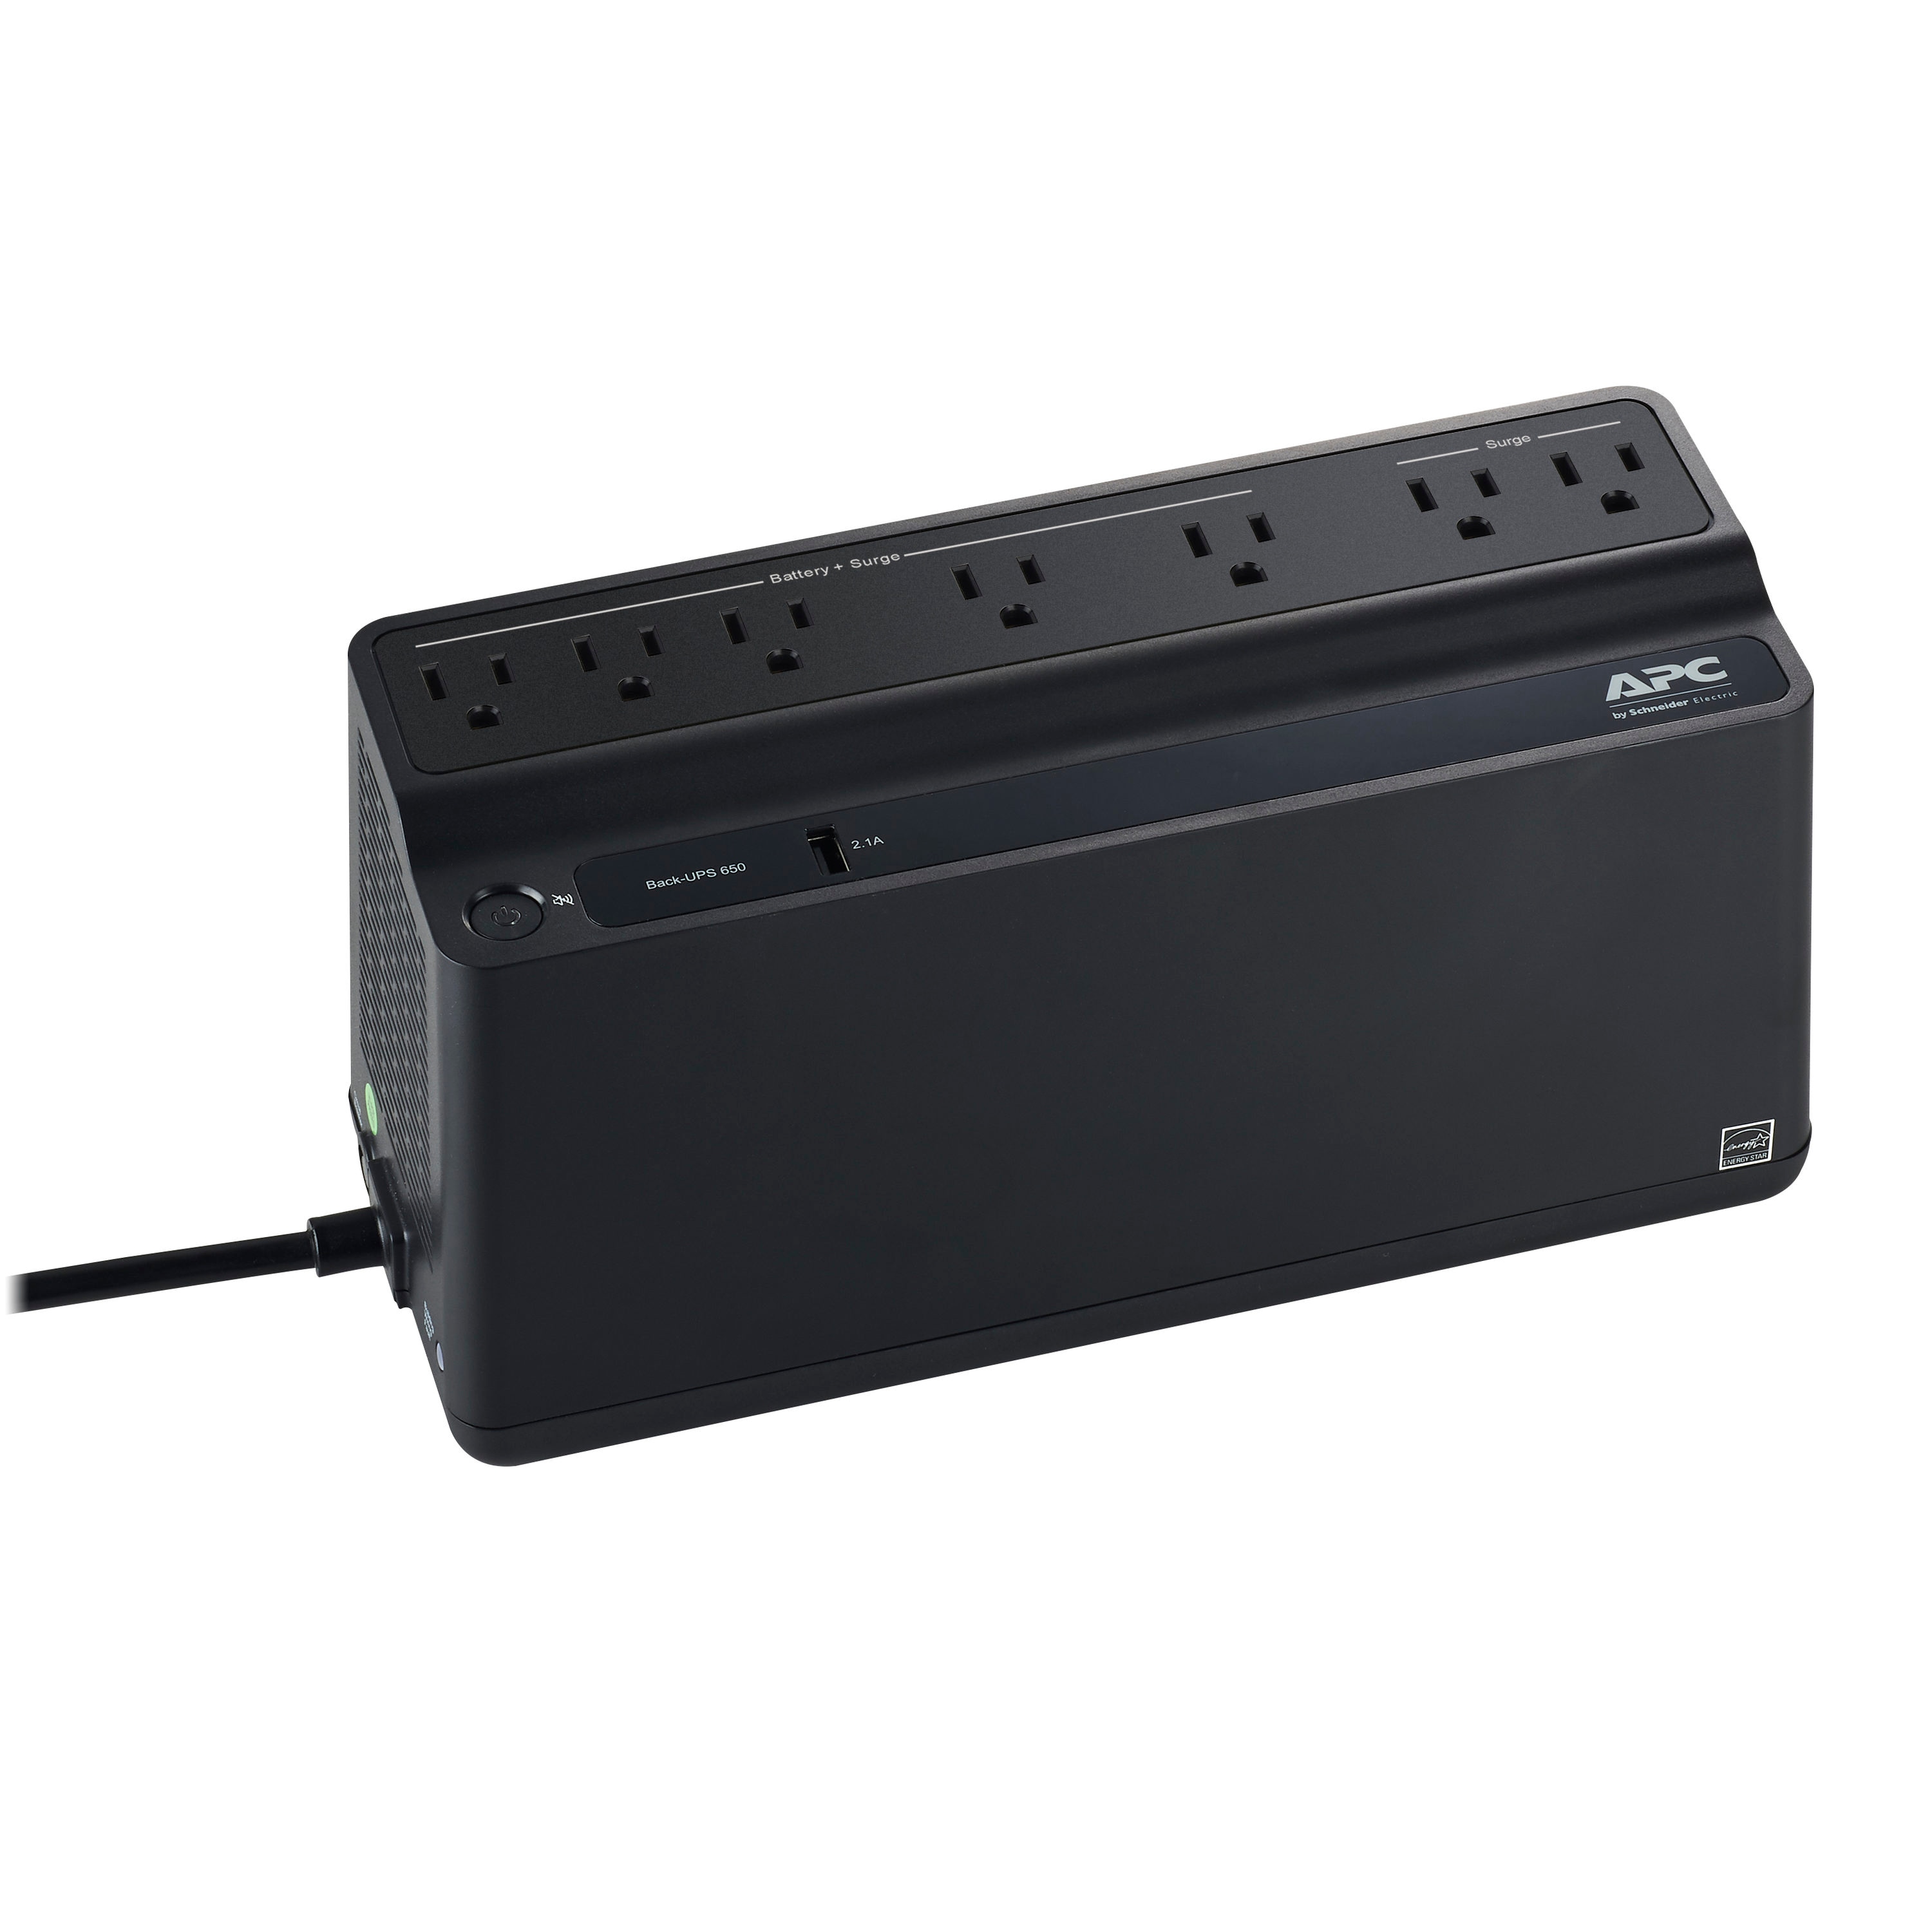 Back-UPS 650VA Uninterruptible Power Supply Battery Backup Surge 8 Outlets USB 